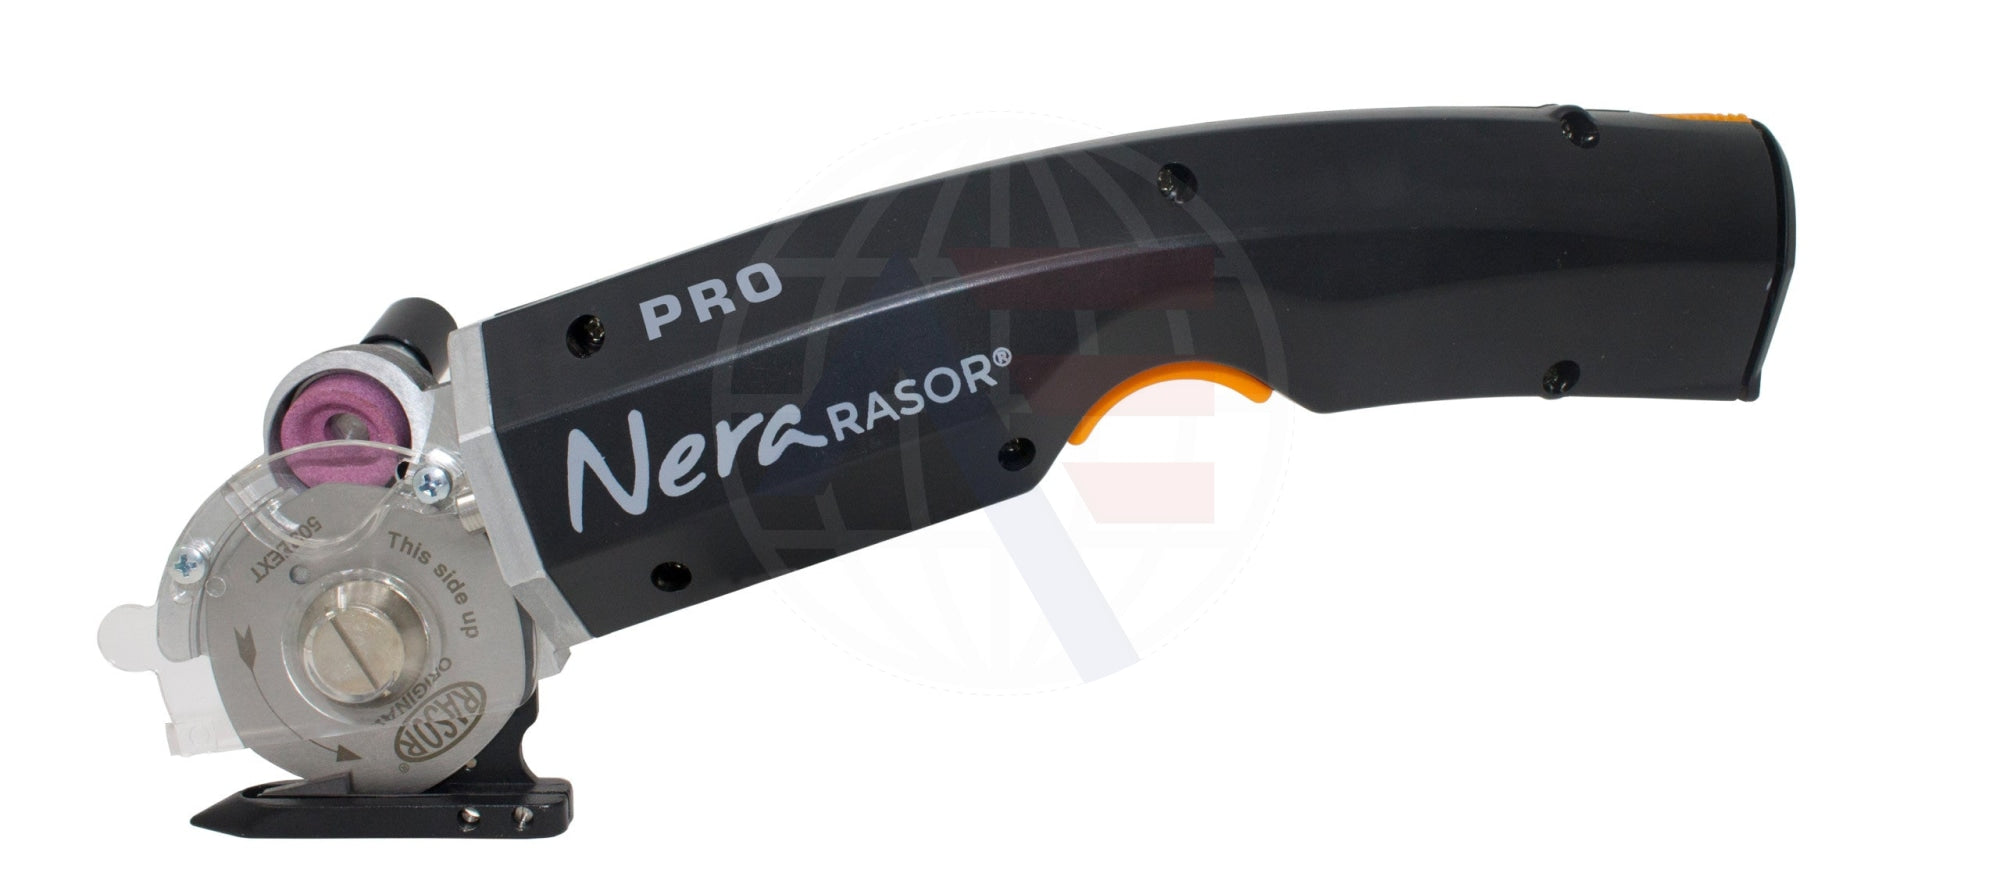 Rasor Nerapro Battery Scissor Cutting Machines